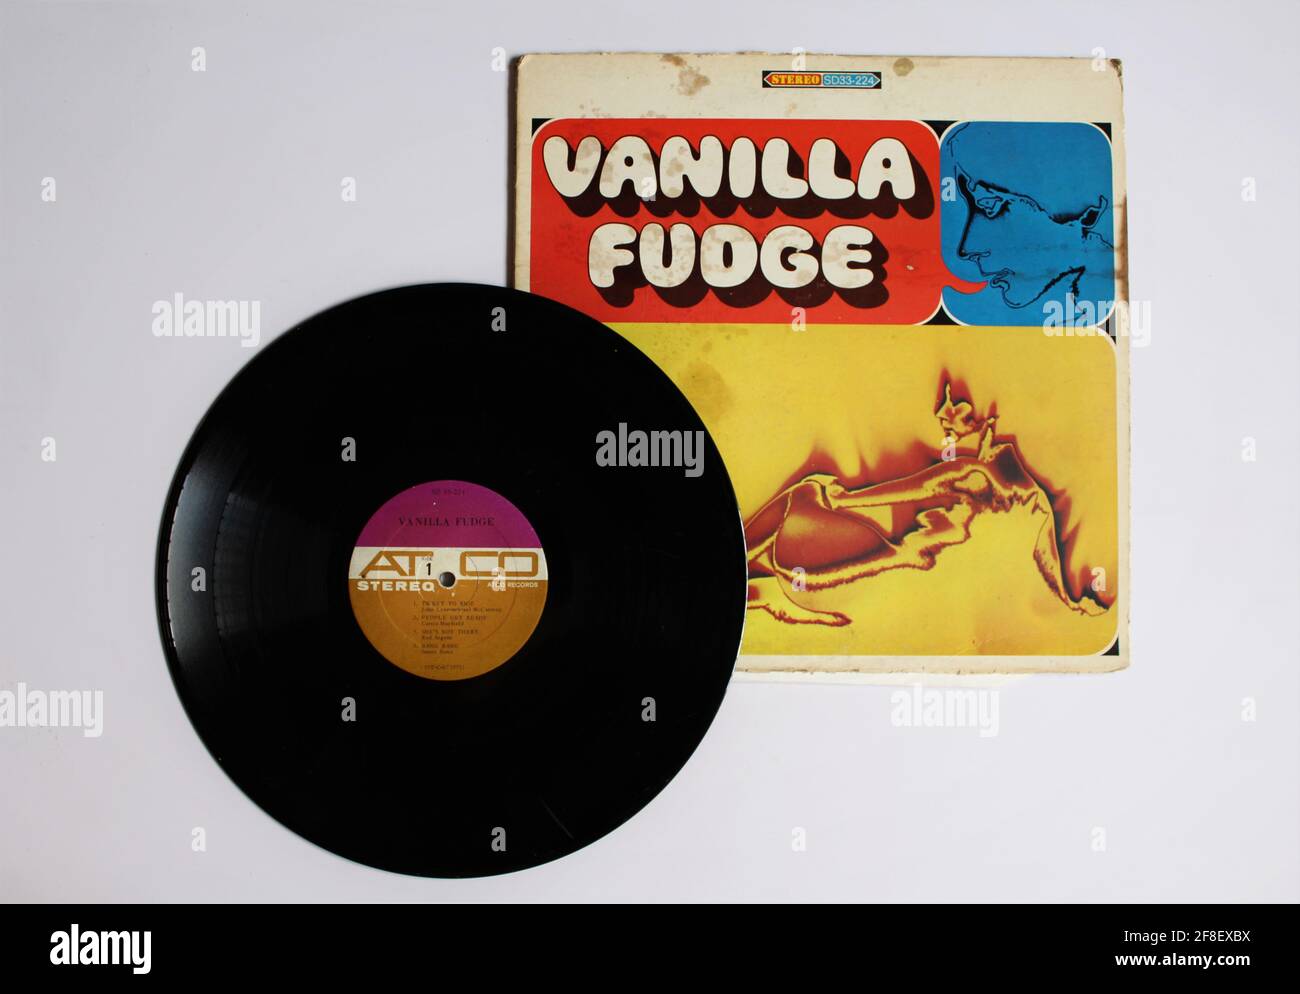 American psychedelic rock band Vanilla Fudge music album on vinyl record LP disc. Titled: Vanilla Fudge Stock Photo